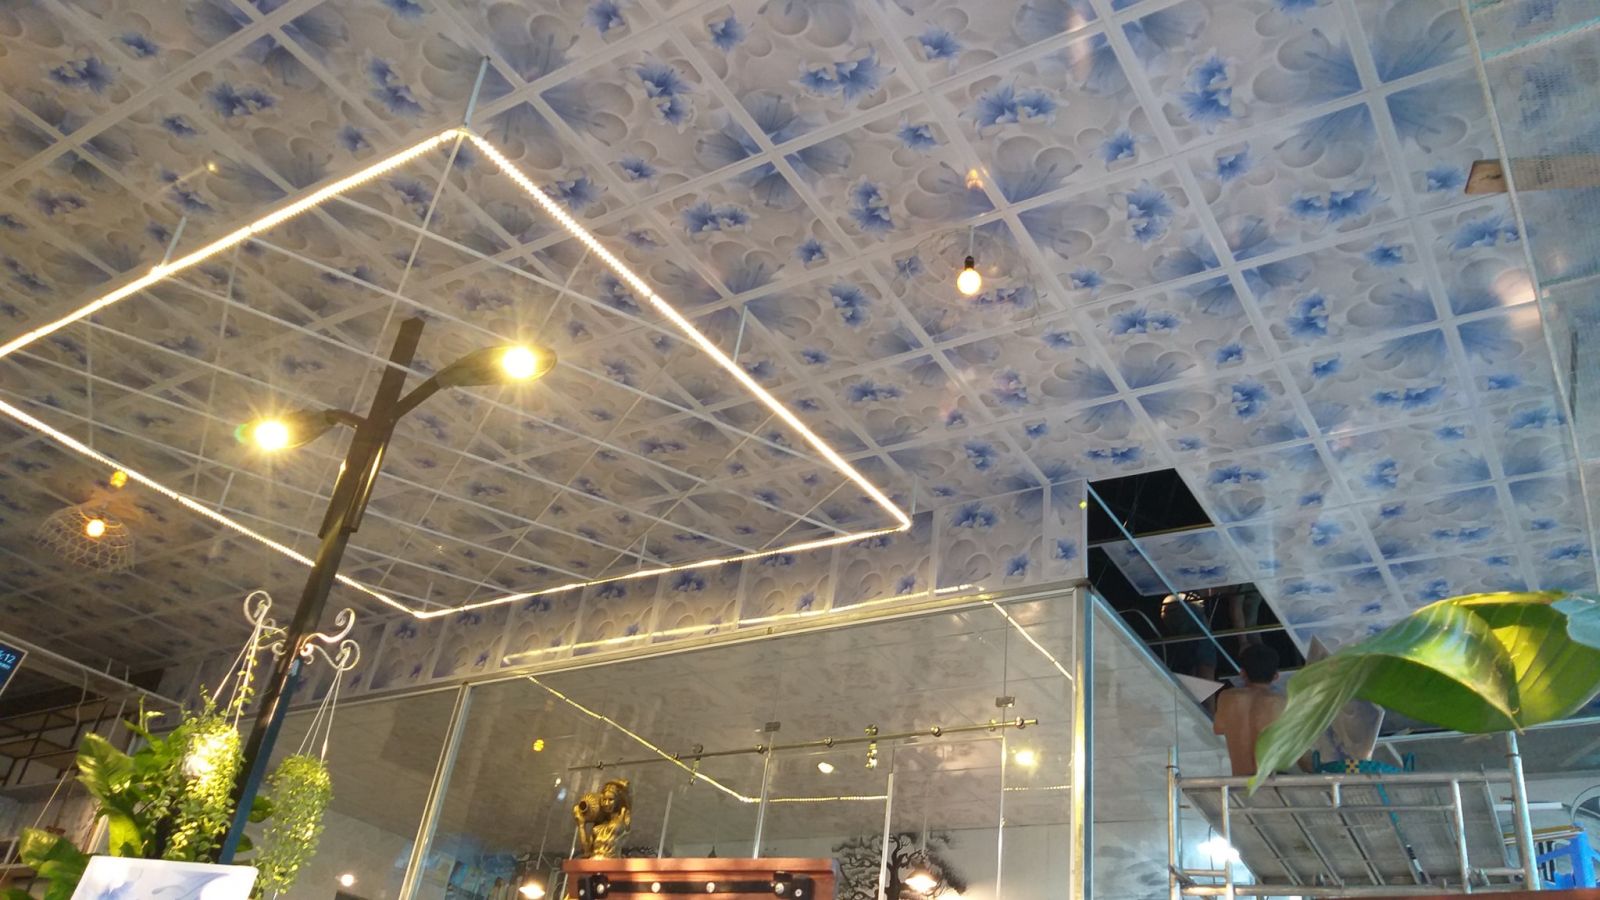 The Most Beautiful 3D Drop Plastic Ceilings